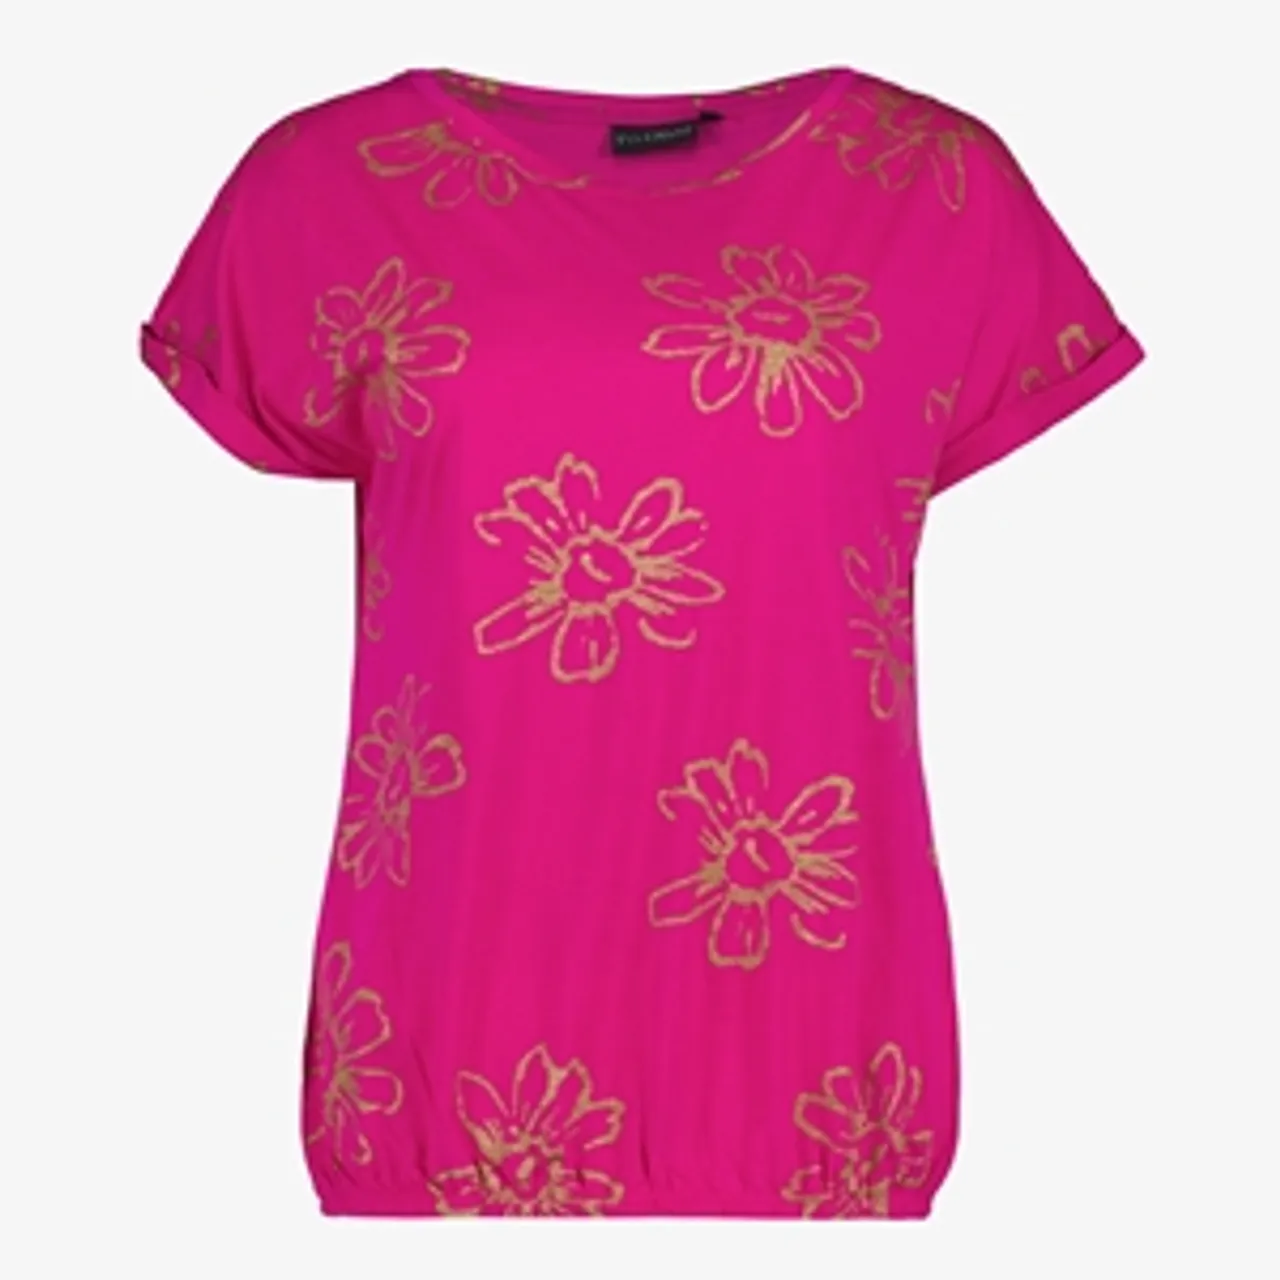 TwoDay dames T-shirt roze met print